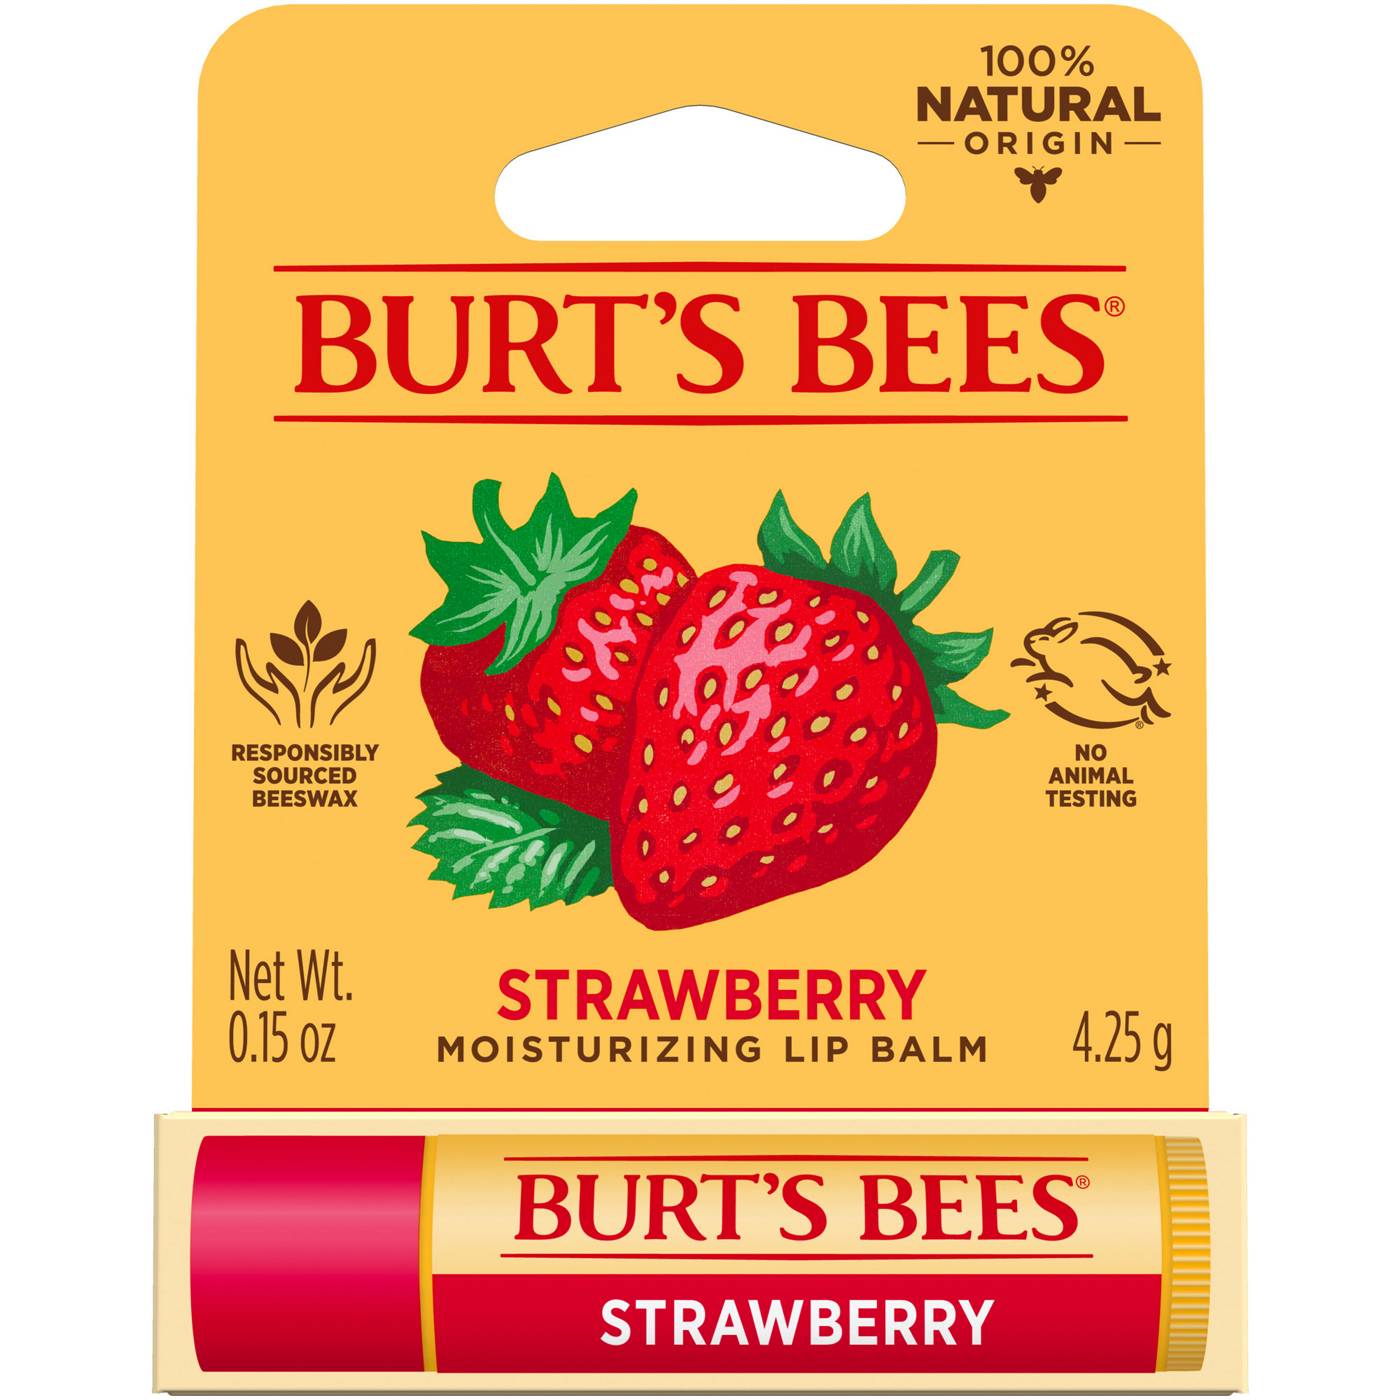 Burt's Bees Strawberry Moisturizing Lip Balm; image 1 of 10